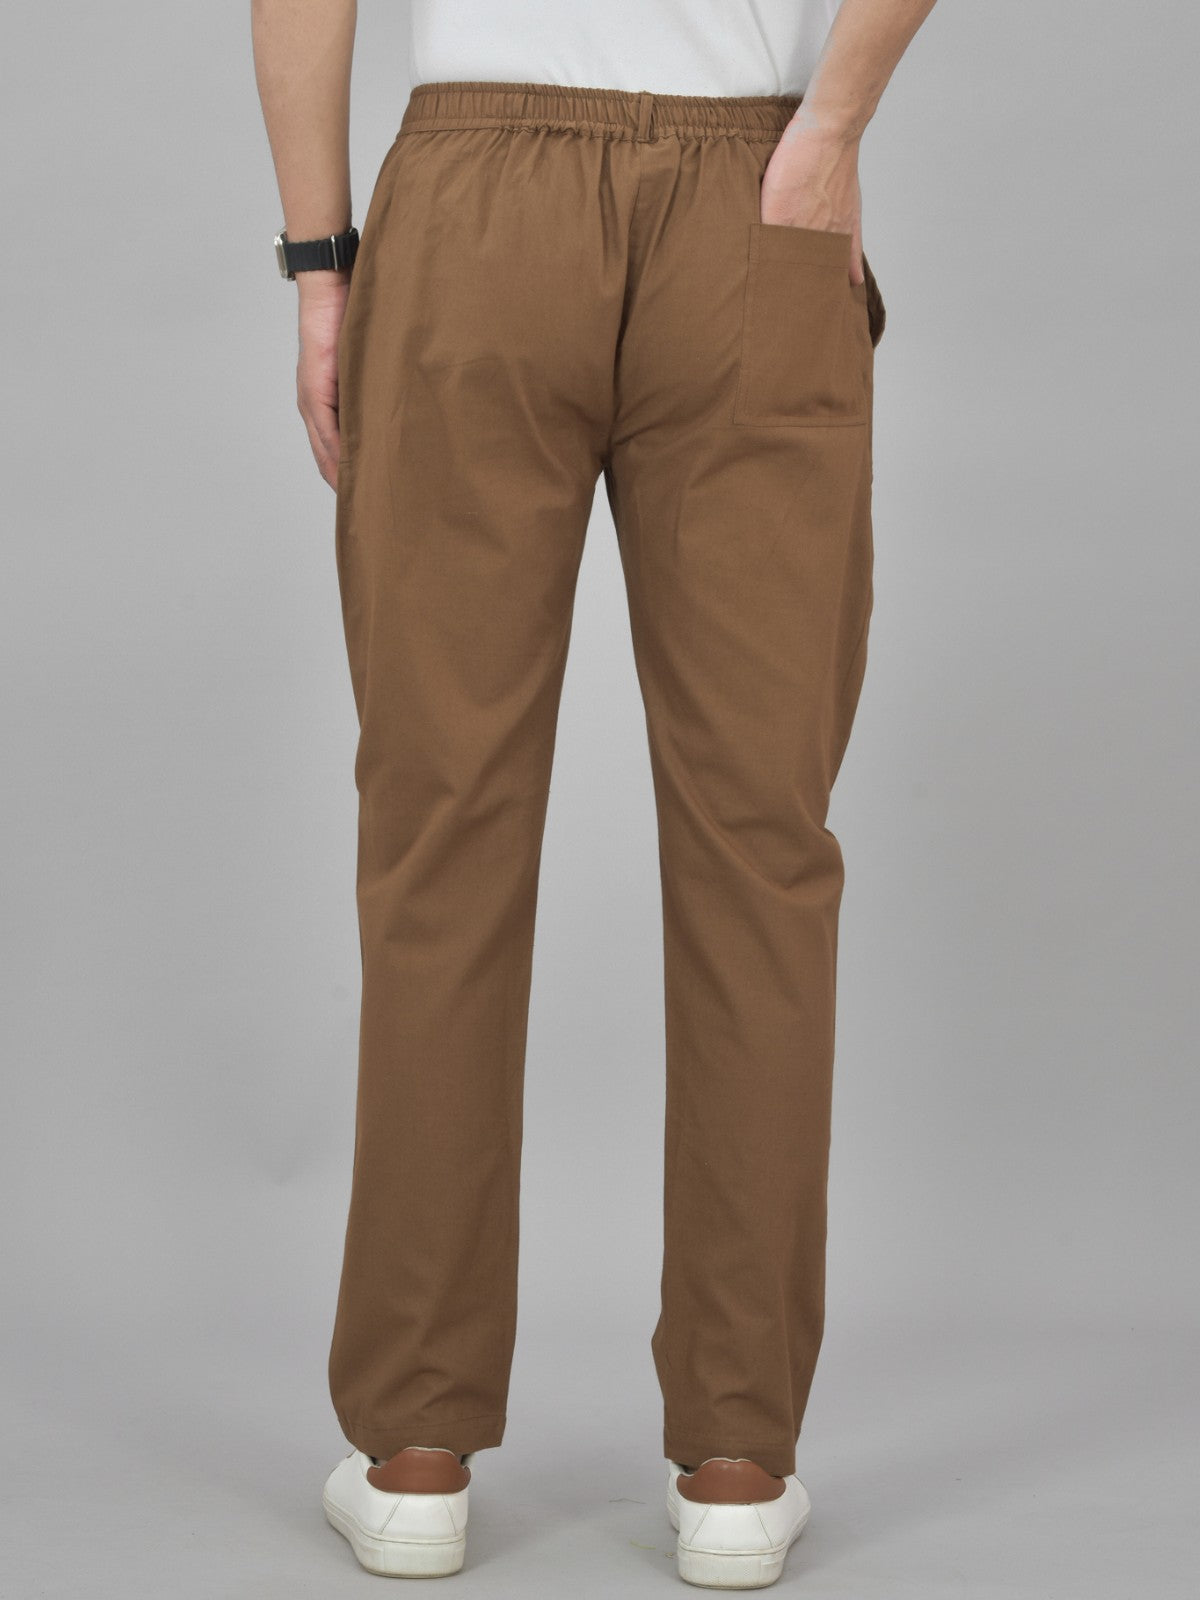 Brown Airy linen  Summer Cool Cotton Comfort Pants For Men